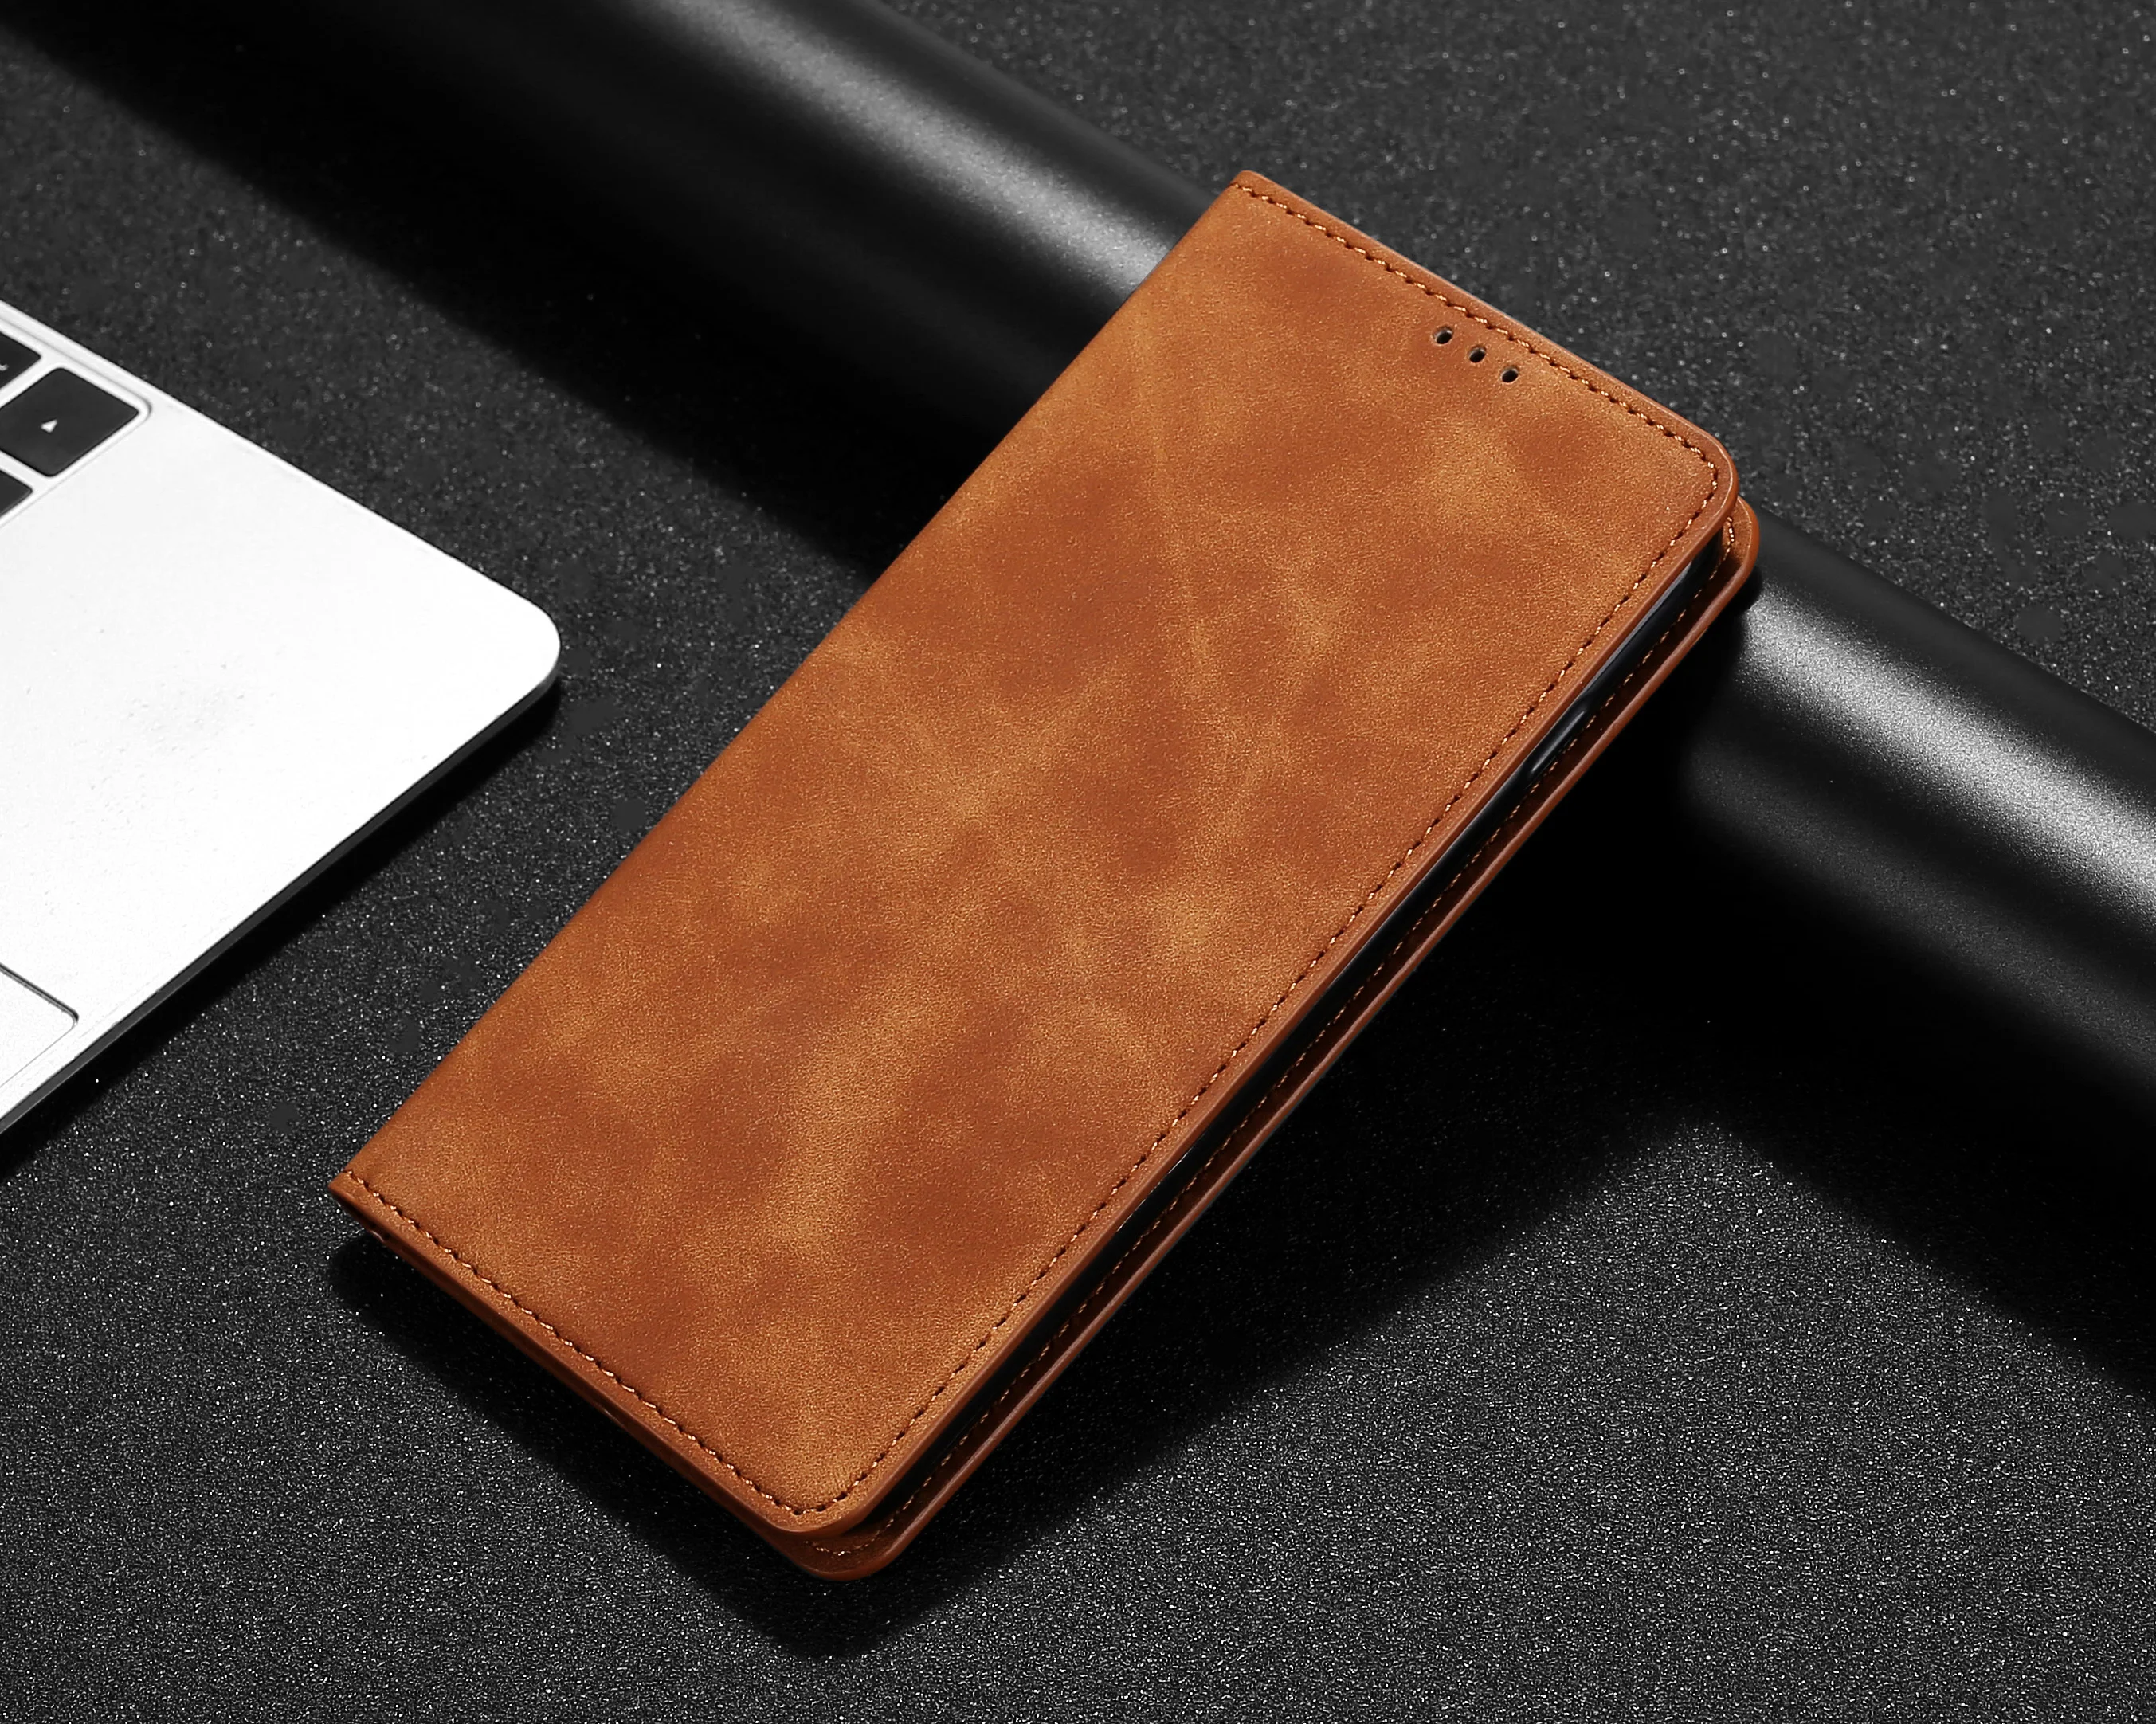 xiaomi leather case hard Xiaomi Mi 10 Lite Case Skin Pro Series Flip Wallet Leather Case for Xiaomi Mi 10 Youth 5G Cover Card Slot Accessories xiaomi leather case hard